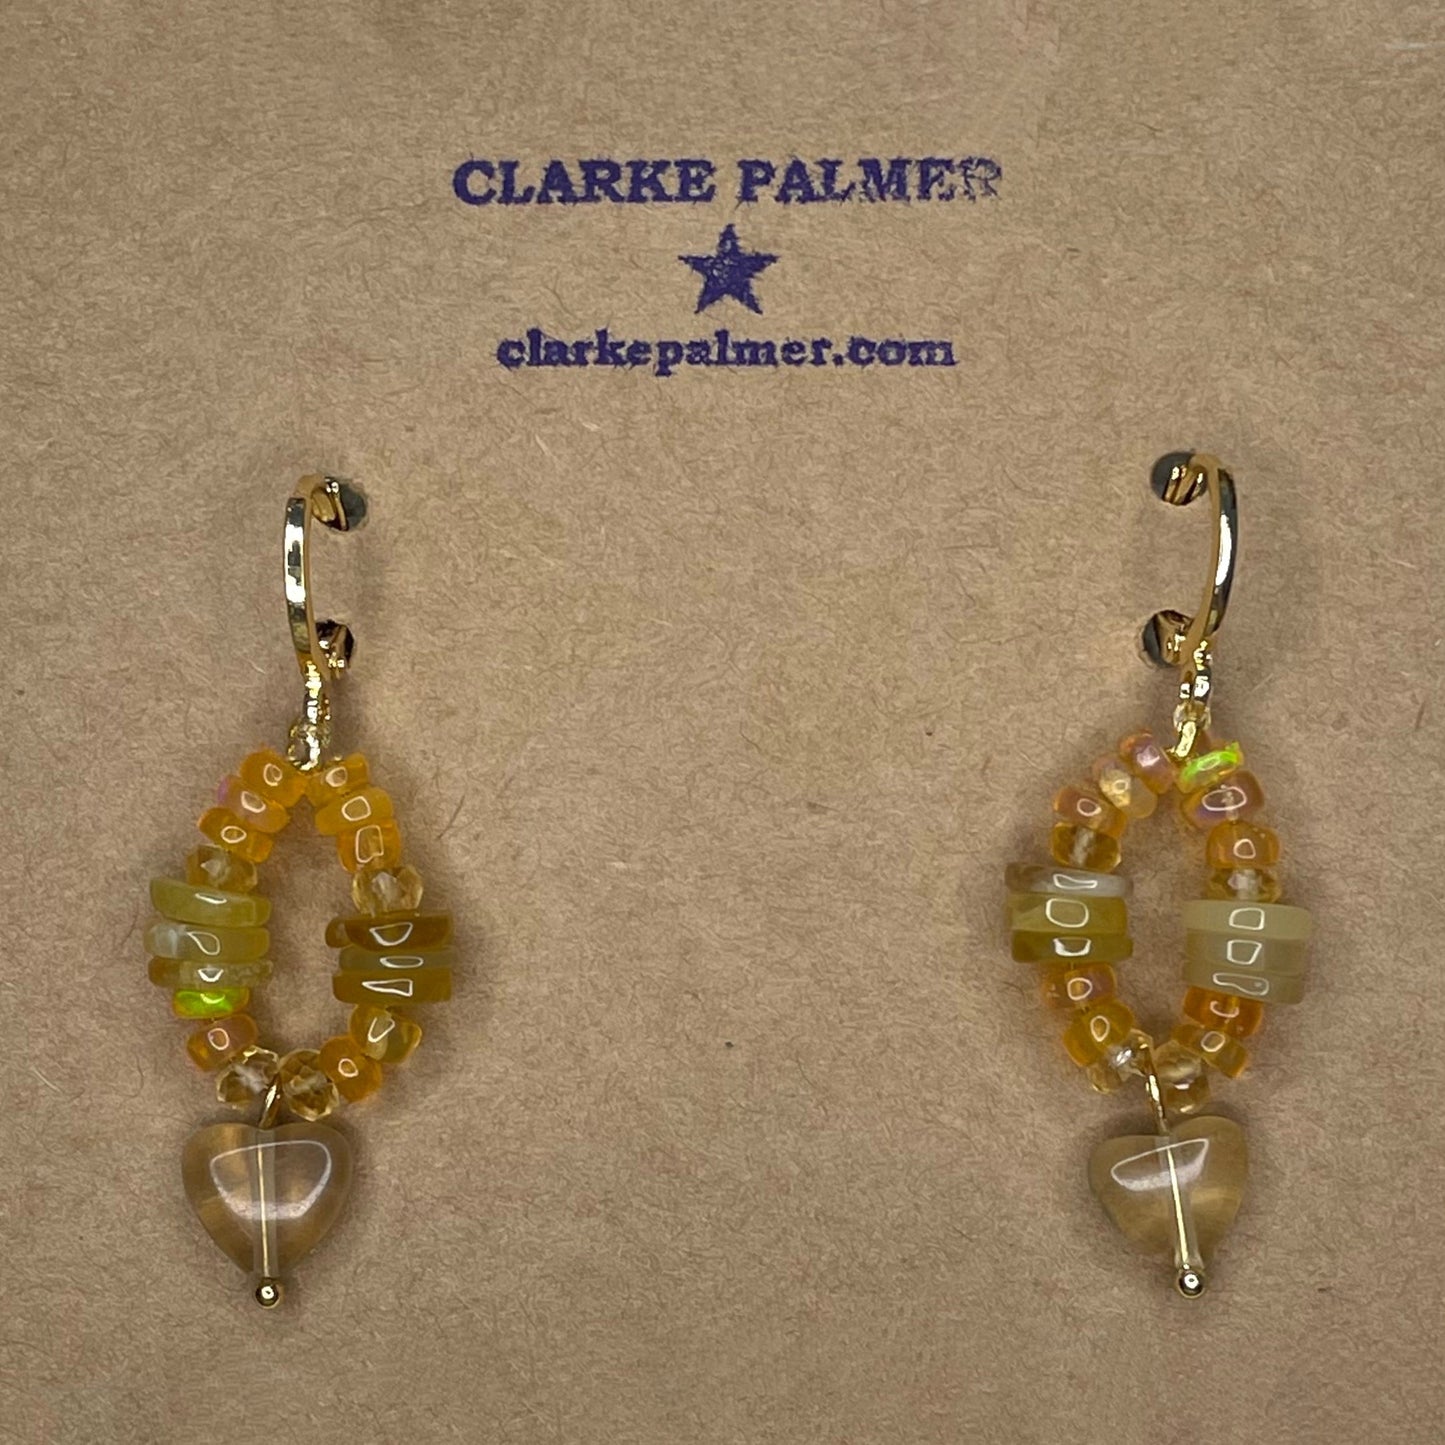 'Sunshine' Opal and Citrine Earrings